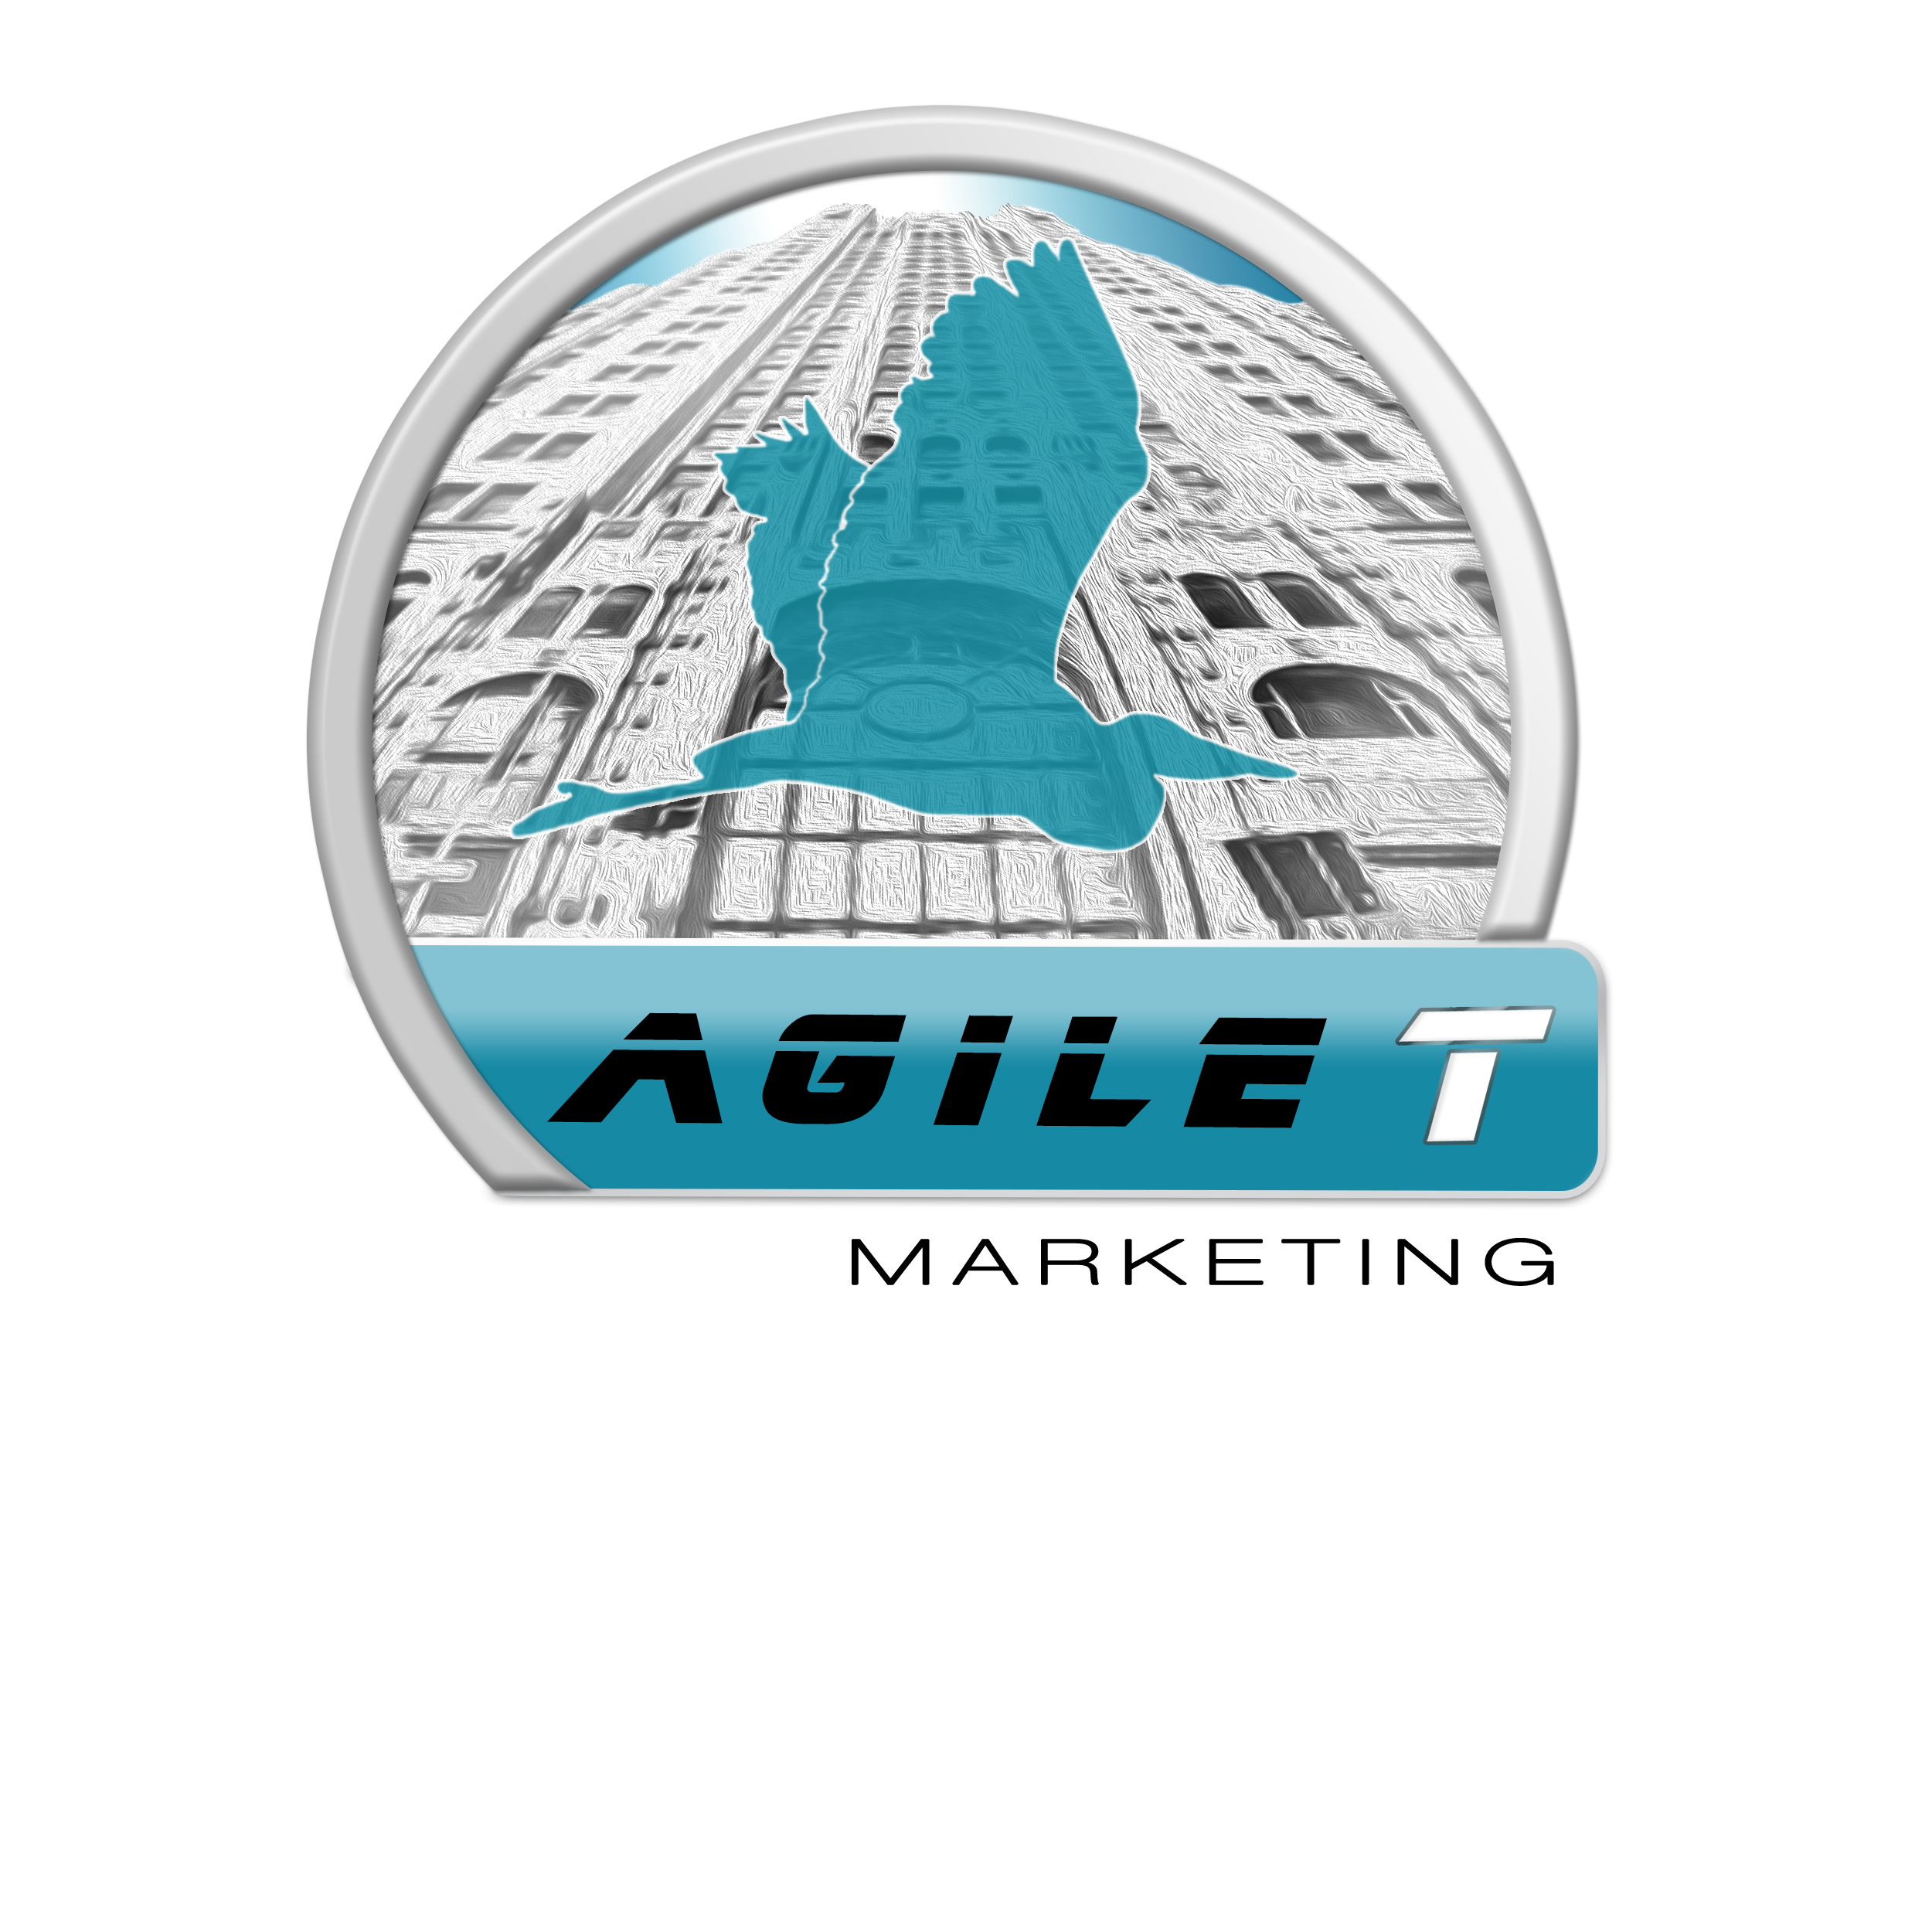 Agile T Marketing Logo